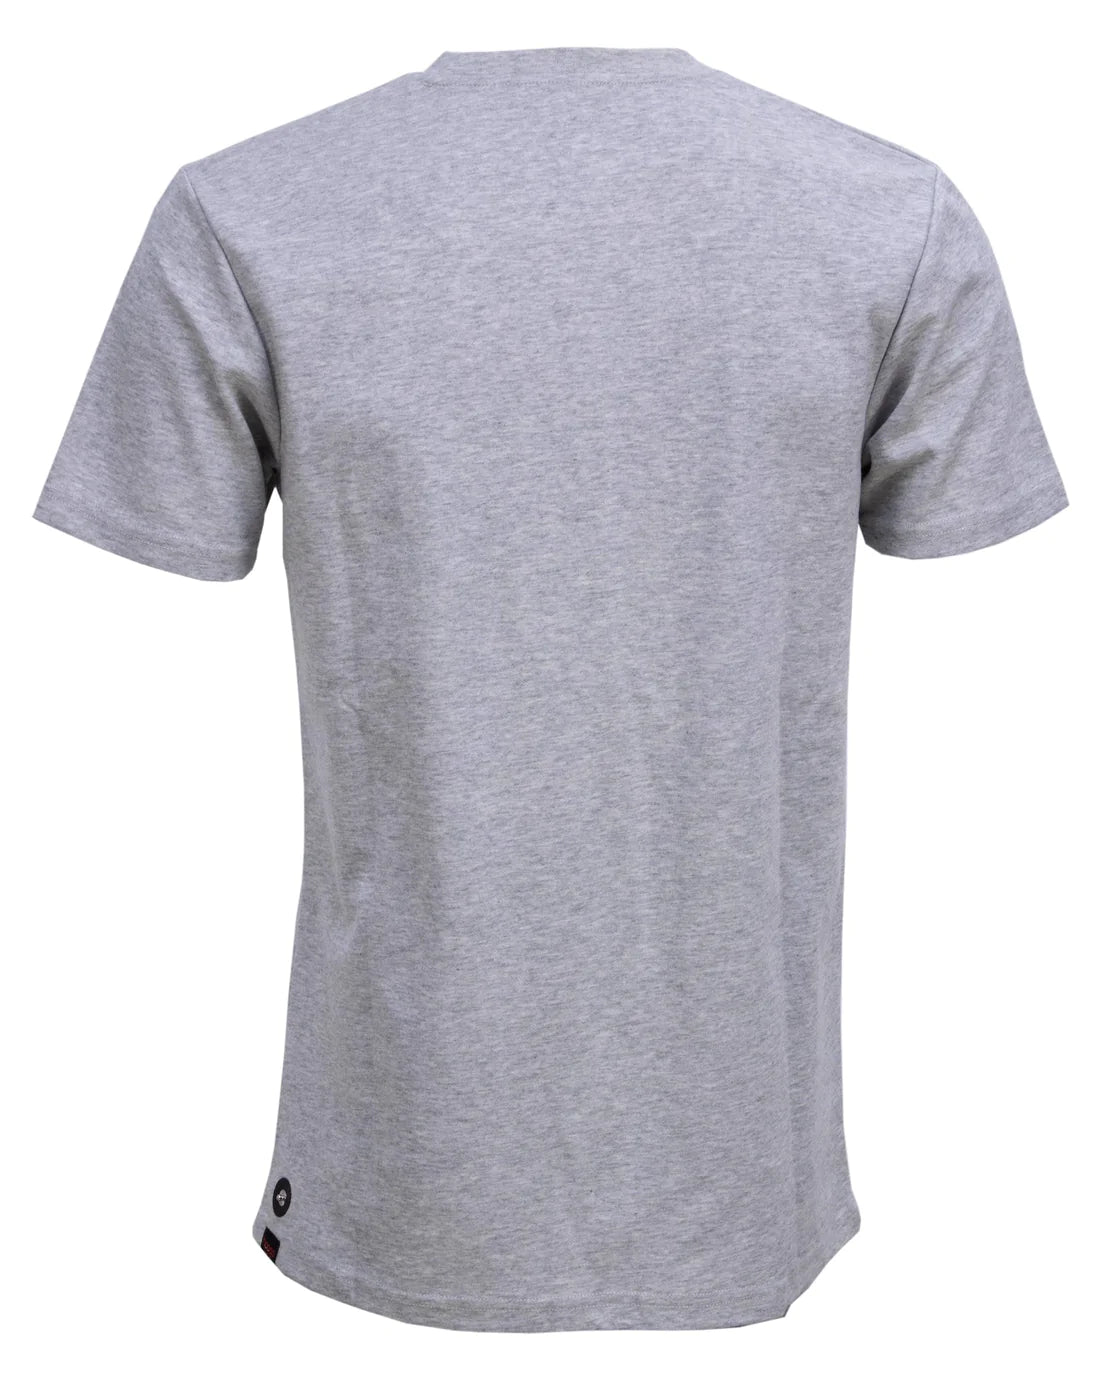 Men's EMF Protection T-Shirt